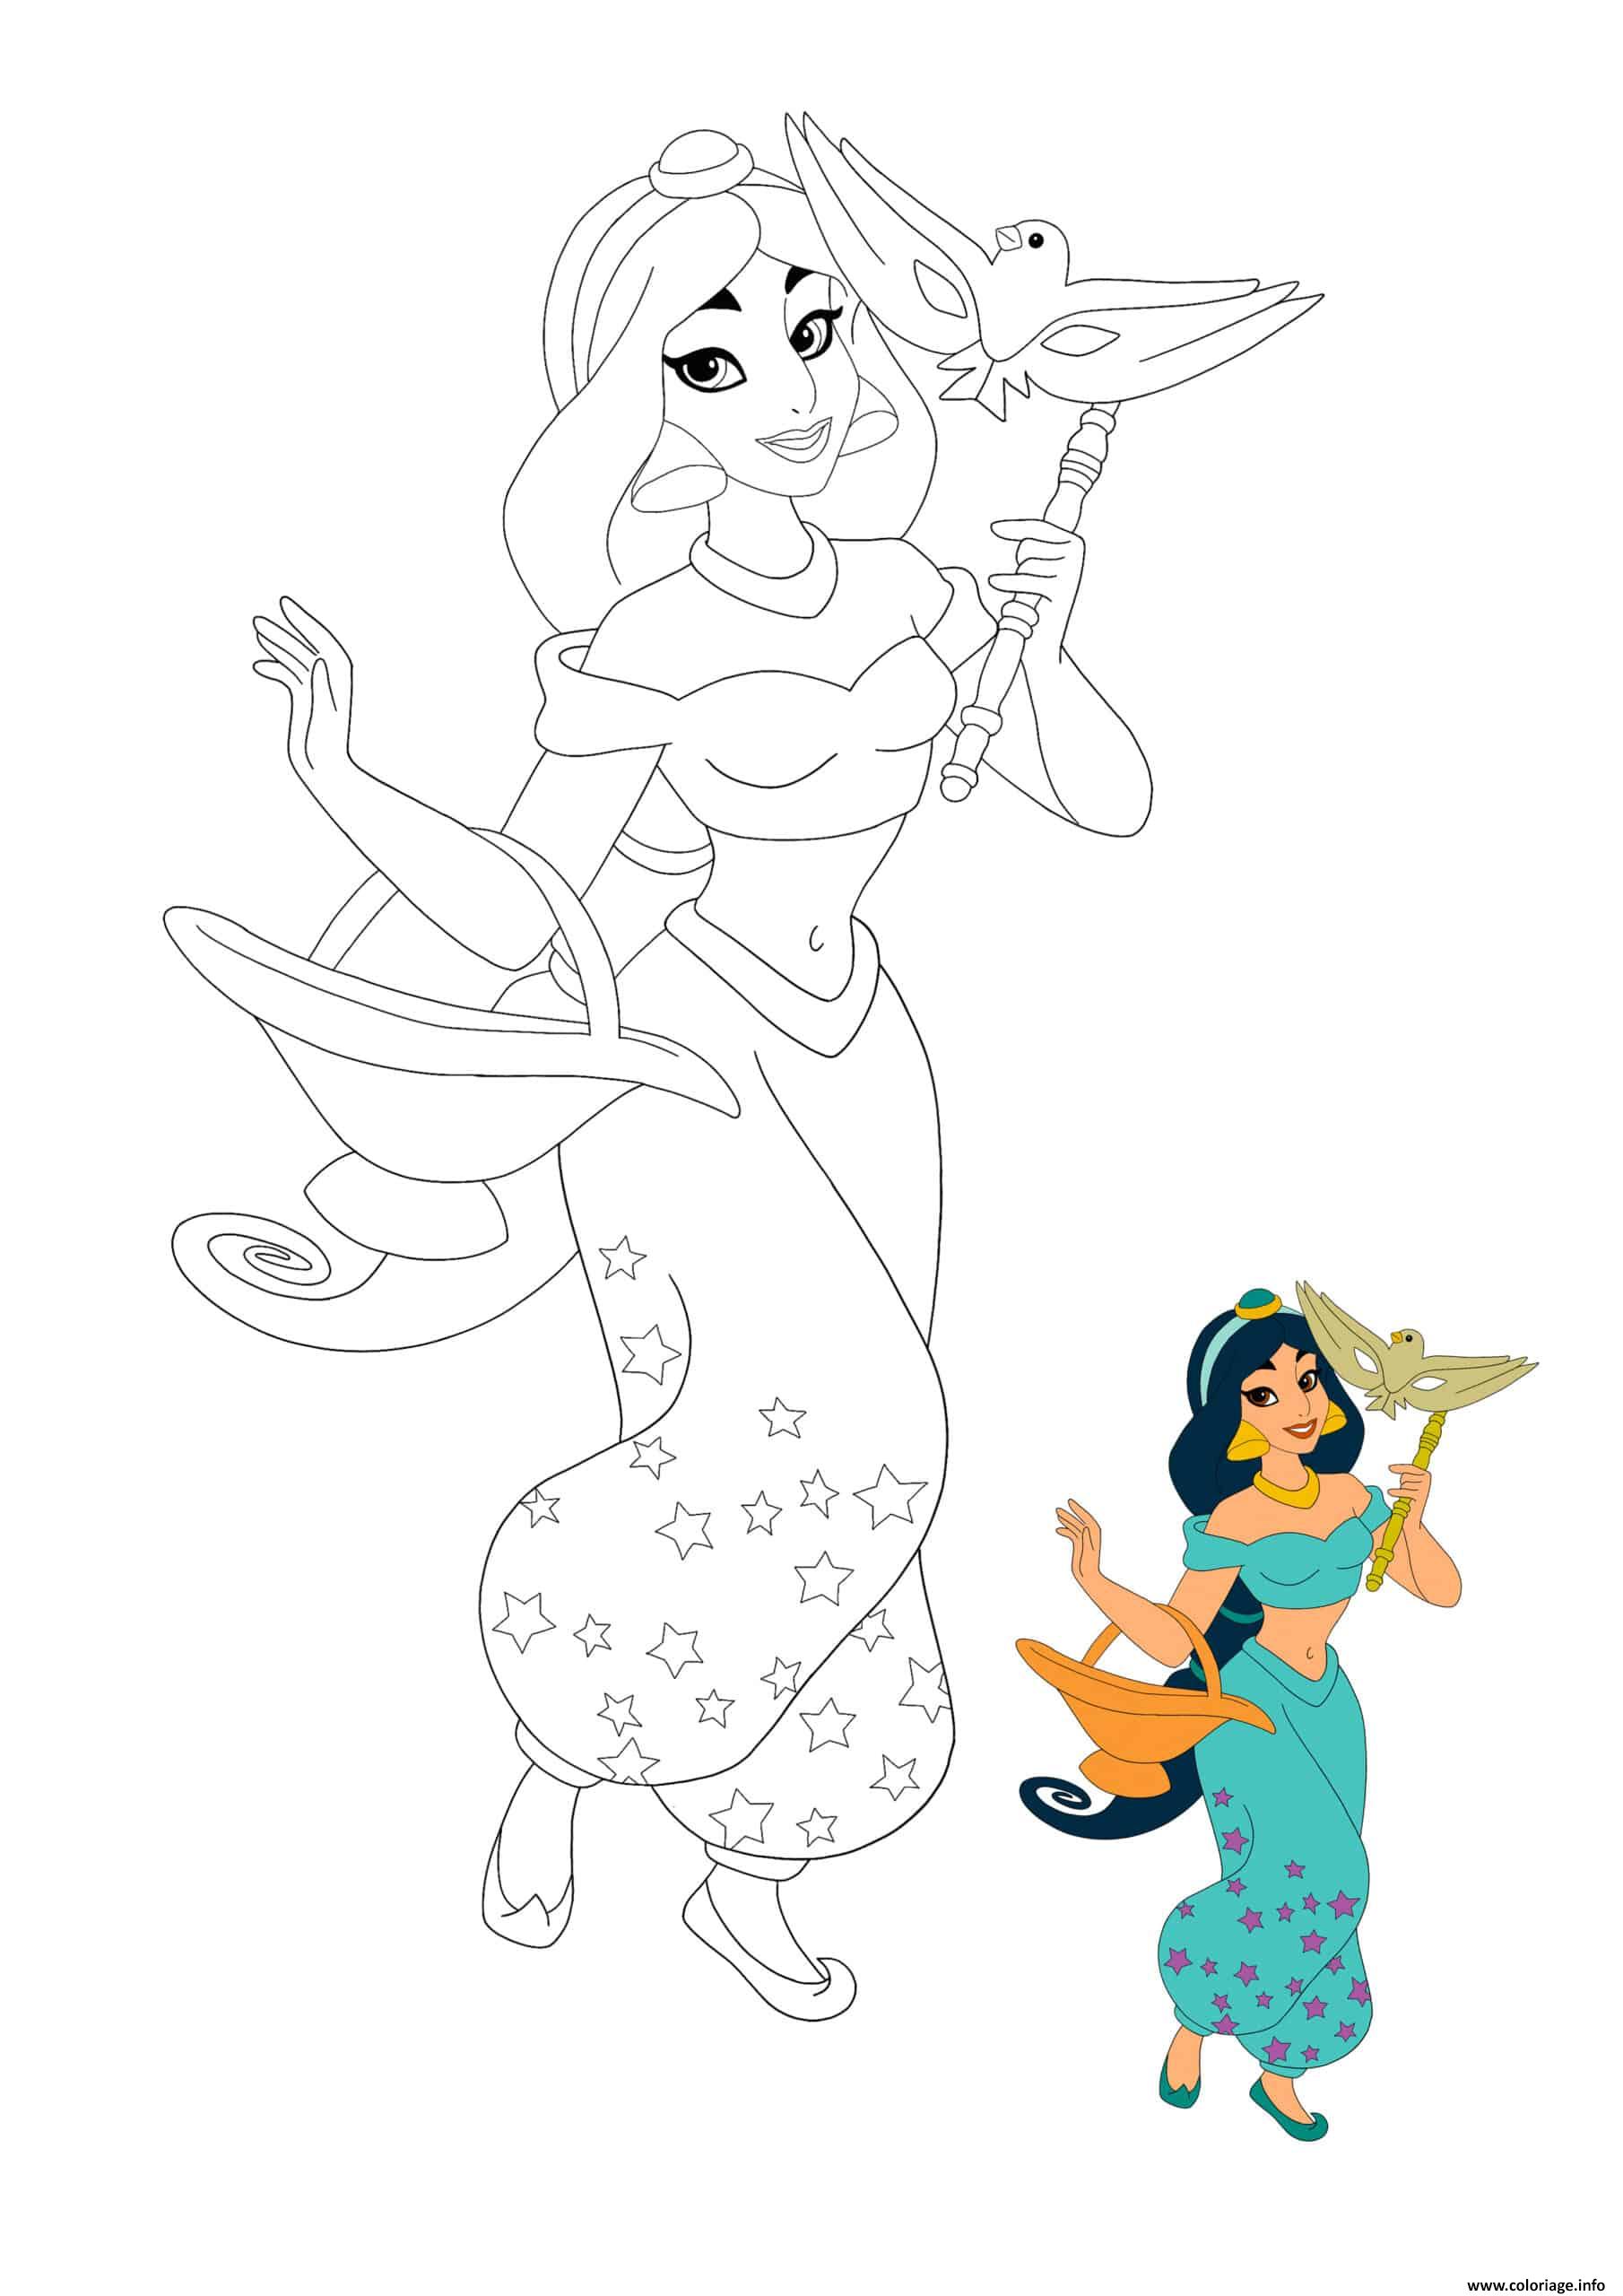 Dessin jasmine princesse de aladdin avec couleur Coloriage Gratuit à Imprimer